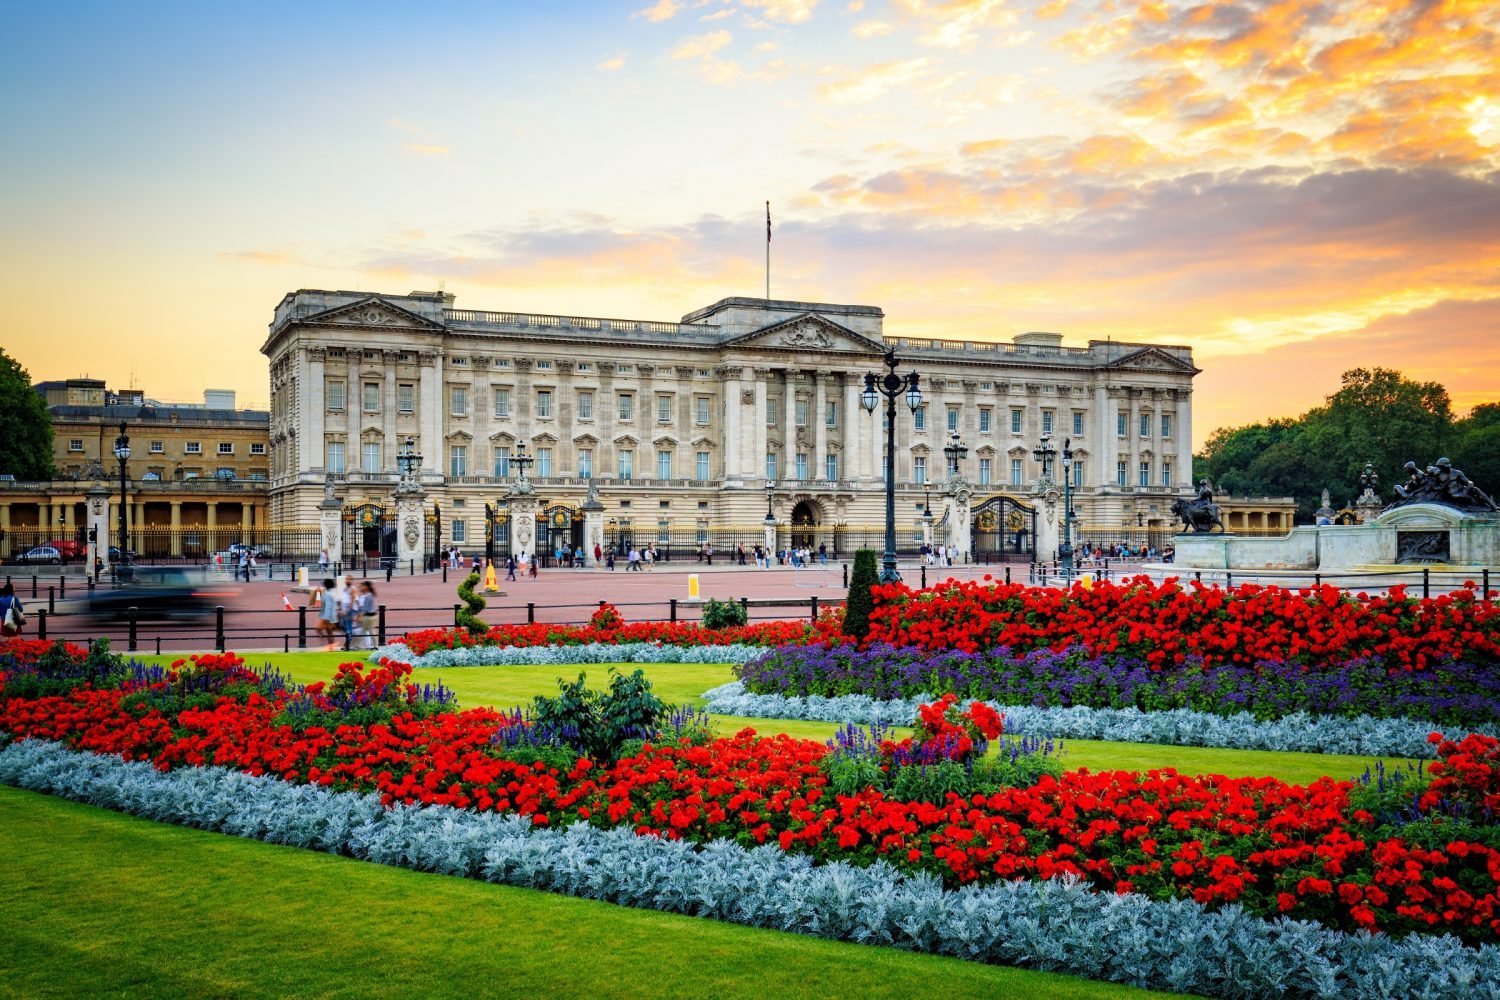 Buckingham Palace – $2.9 Billion